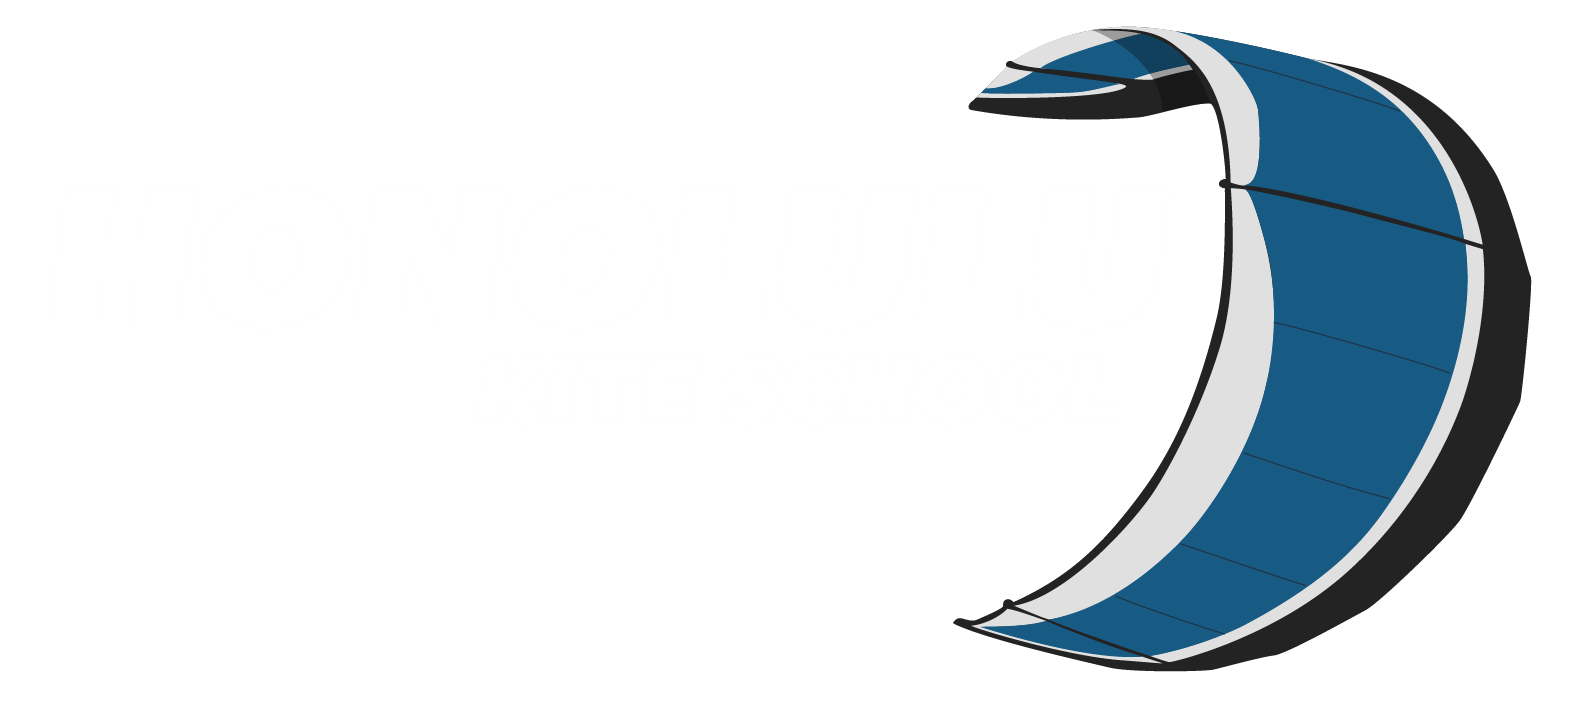 Honolulu Kite School